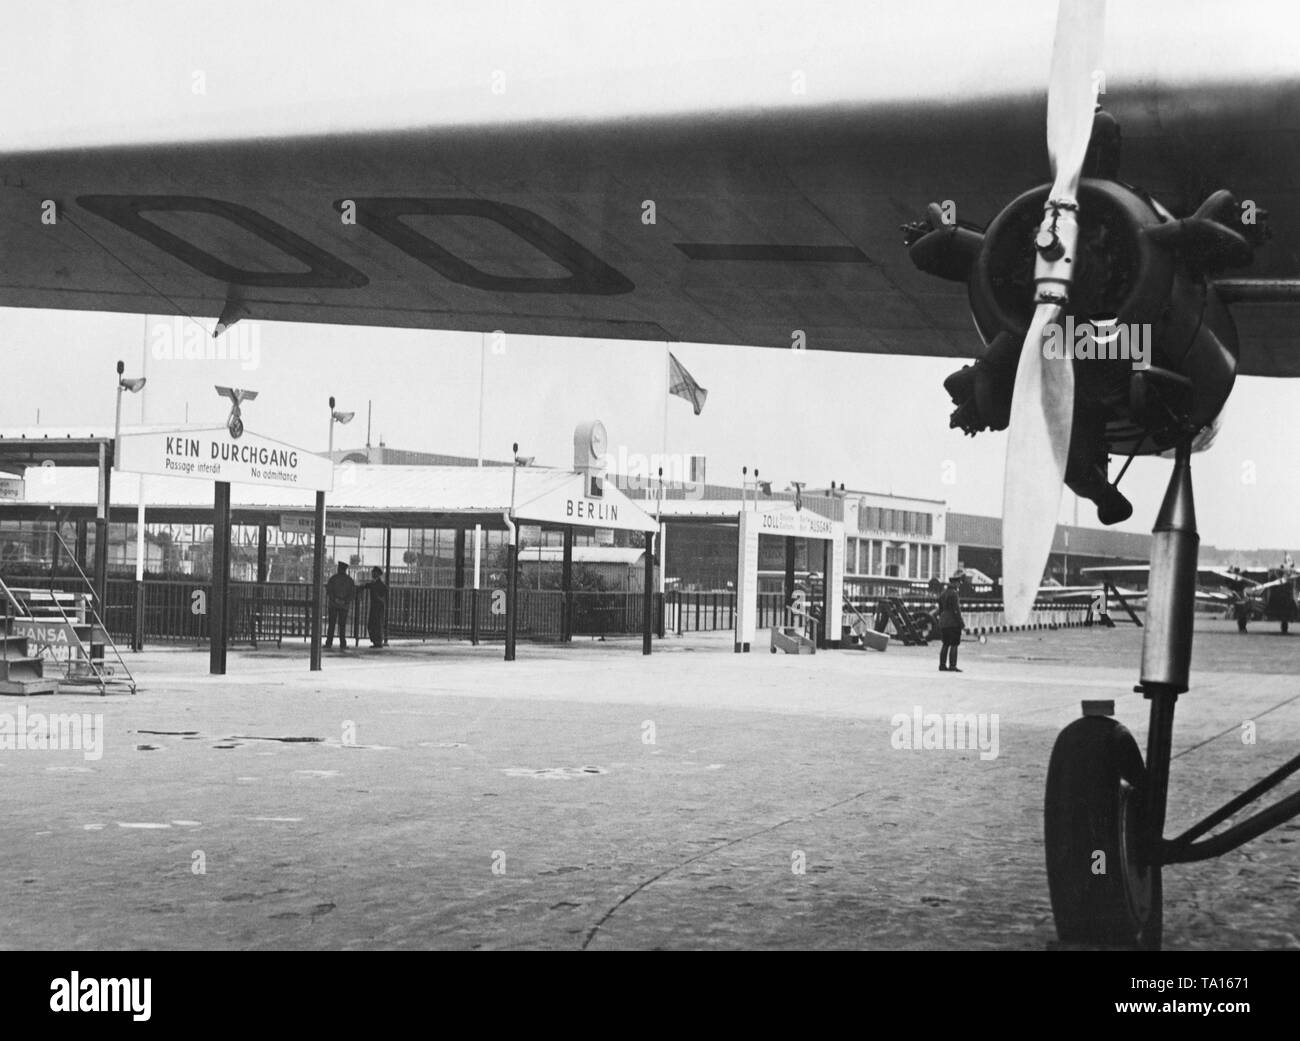 Boarding gates at the Berlin-Tempelhof Airport Stock Photo - Alamy